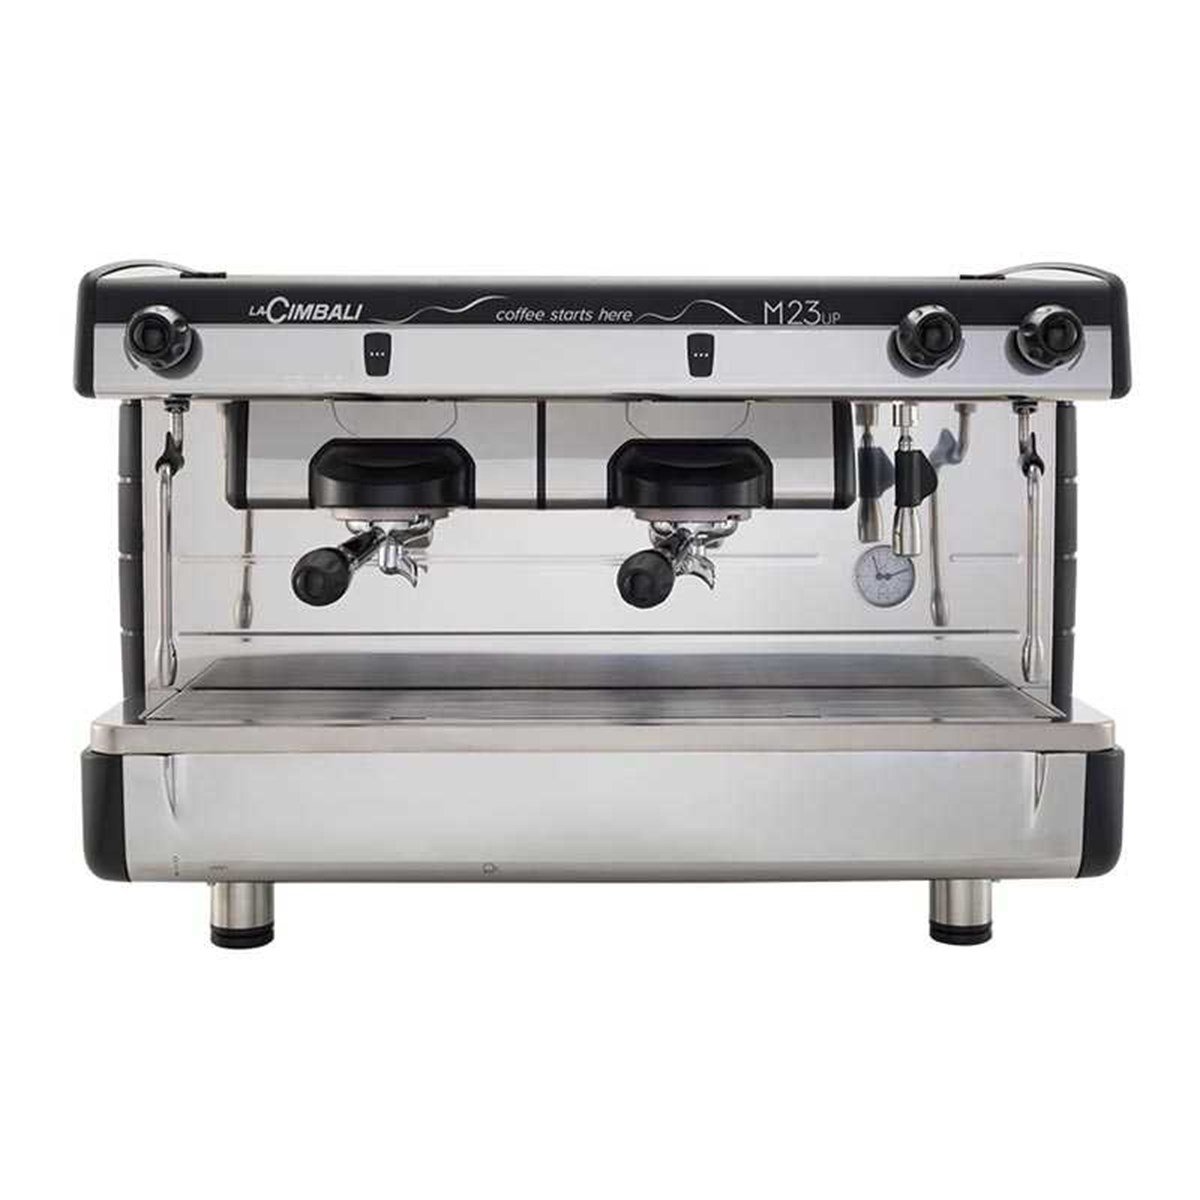 La Cimbali M23 UP C/2 Yarı Otomatik Espresso Kahve Makinesi 2 Grup